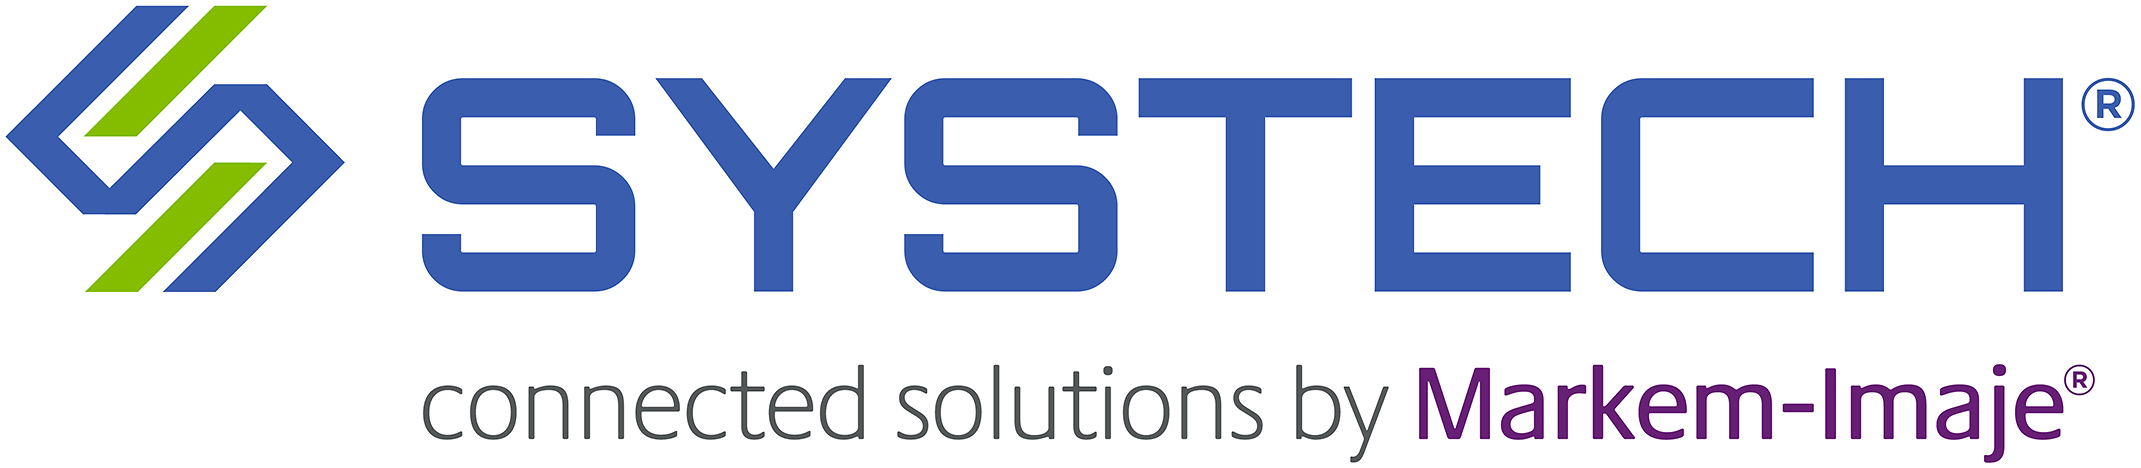 Systech_logo